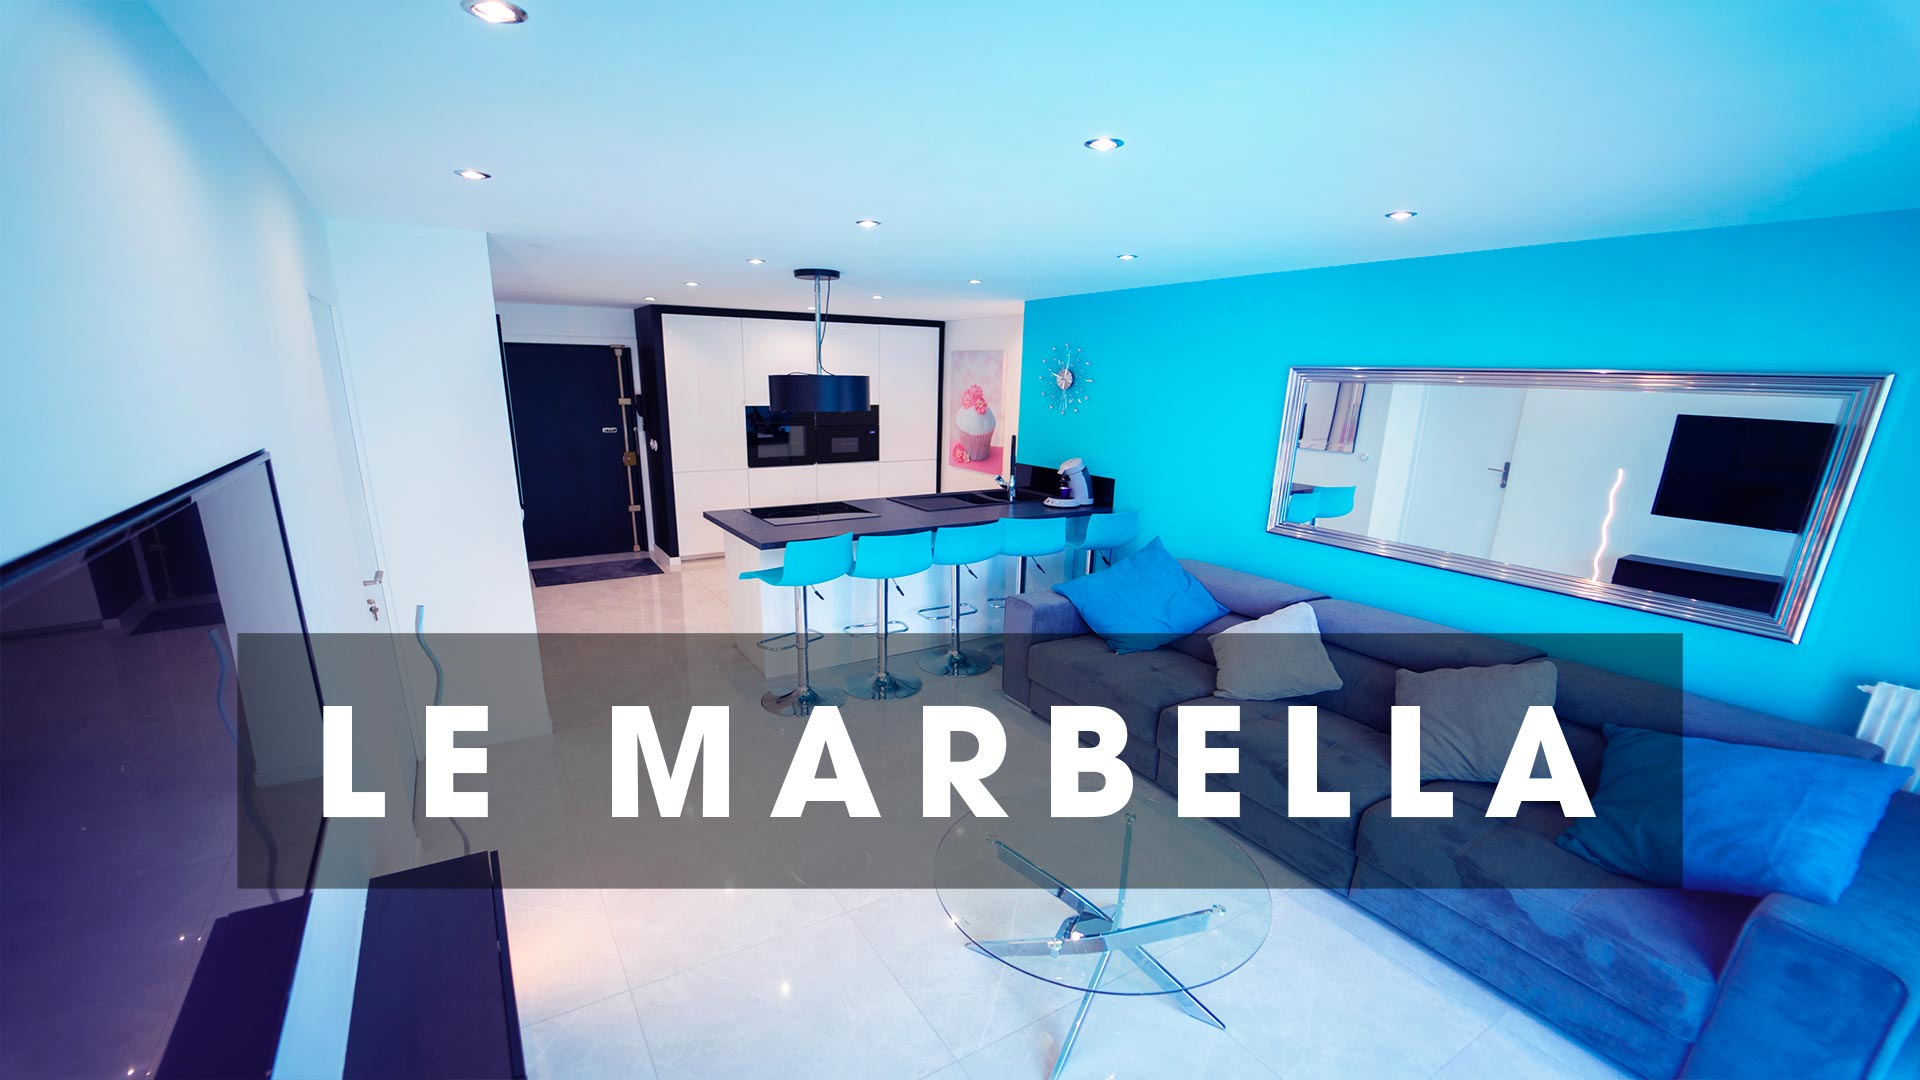 Turquoise location Le Marbella Le Marbella,colocation lyon,location,lyon